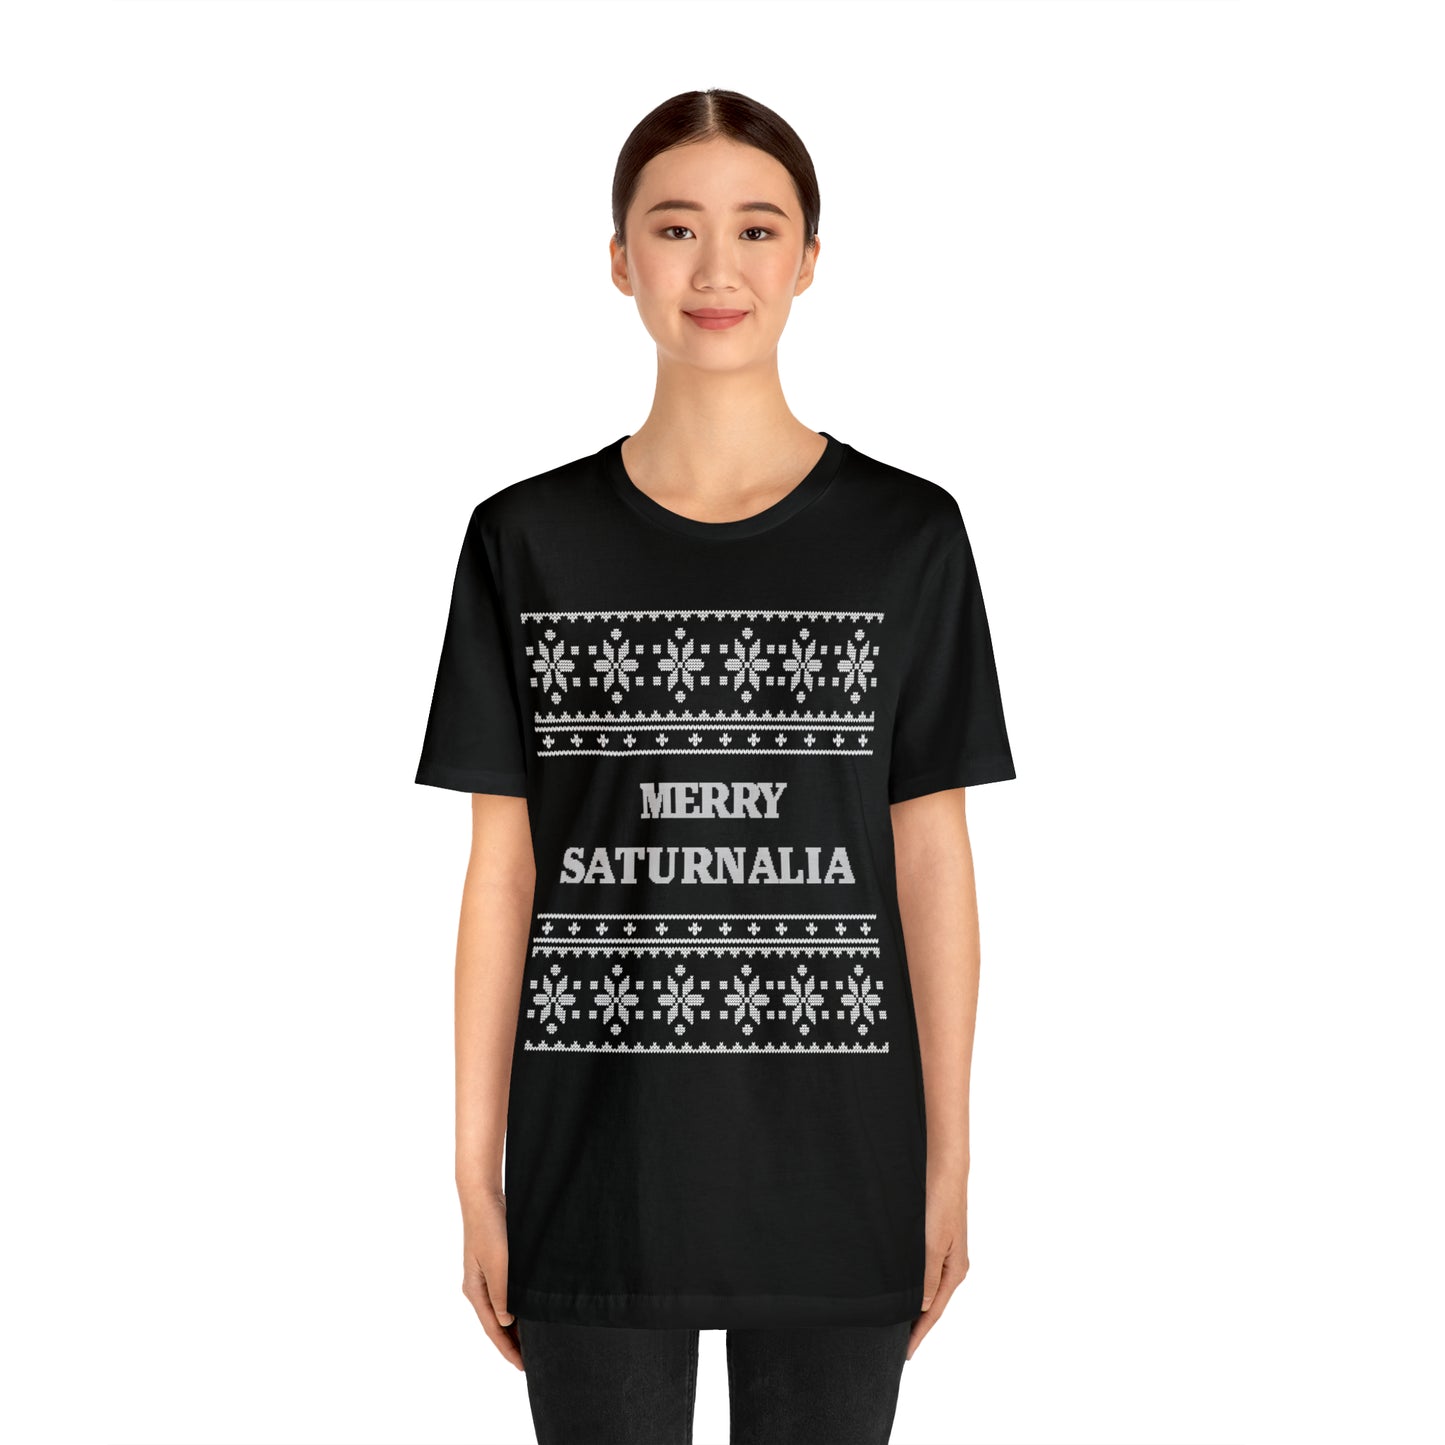 Saturnalia Roman History Ugly Christmas Sweater Holiday Shirt Knit Style